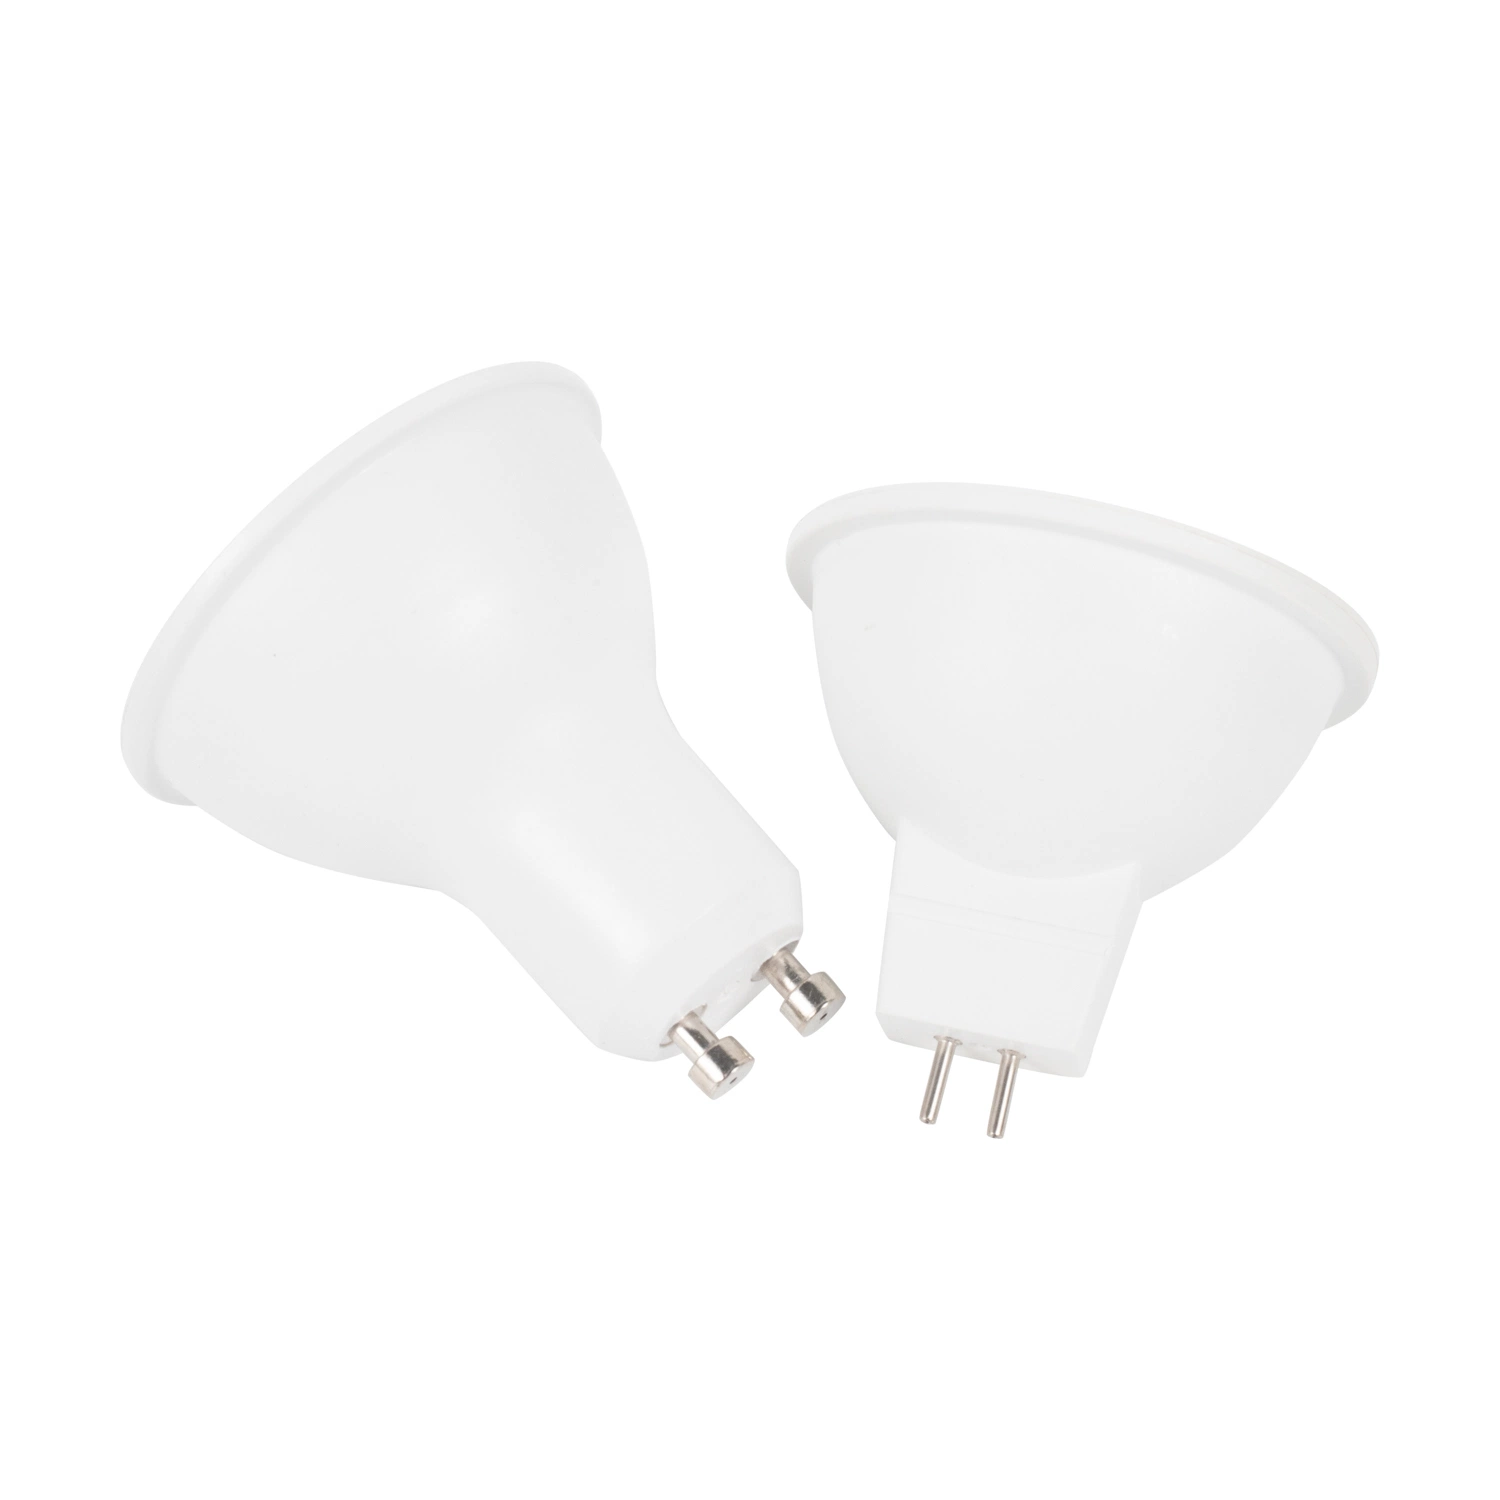 LED Bulb Spotlight MR16 GU10 Spot Lighting 3W 4W 5W 6W 7W Energy Saving Lamp Home Decoration Light